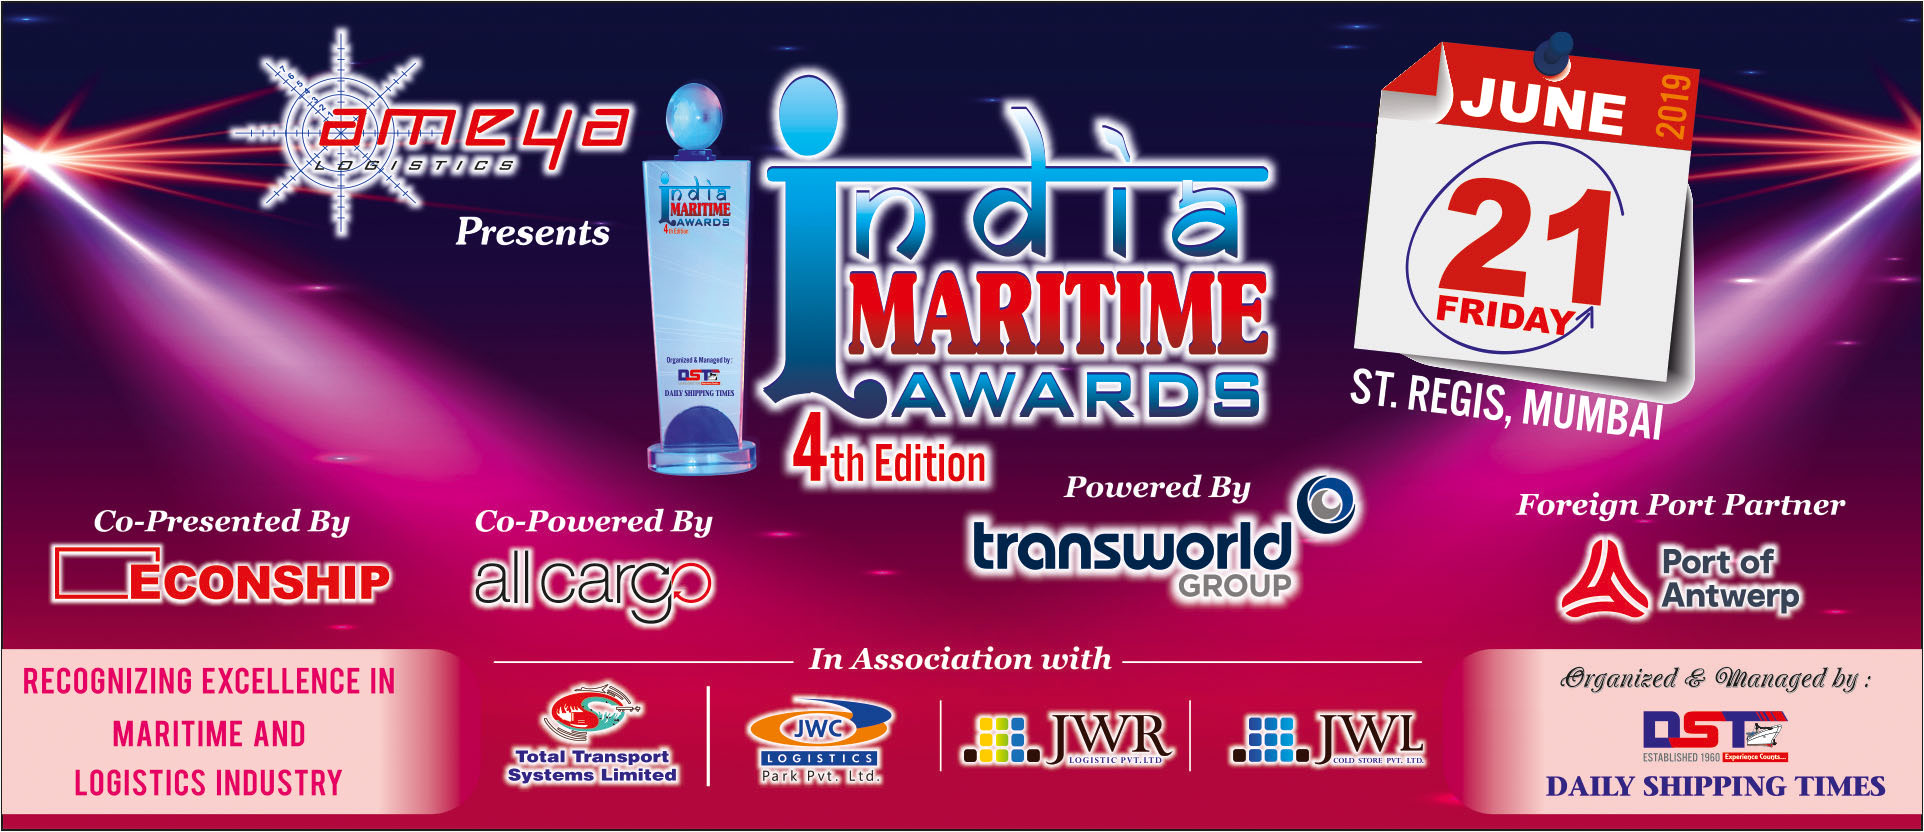 India Maritime Awards - 4th Edition